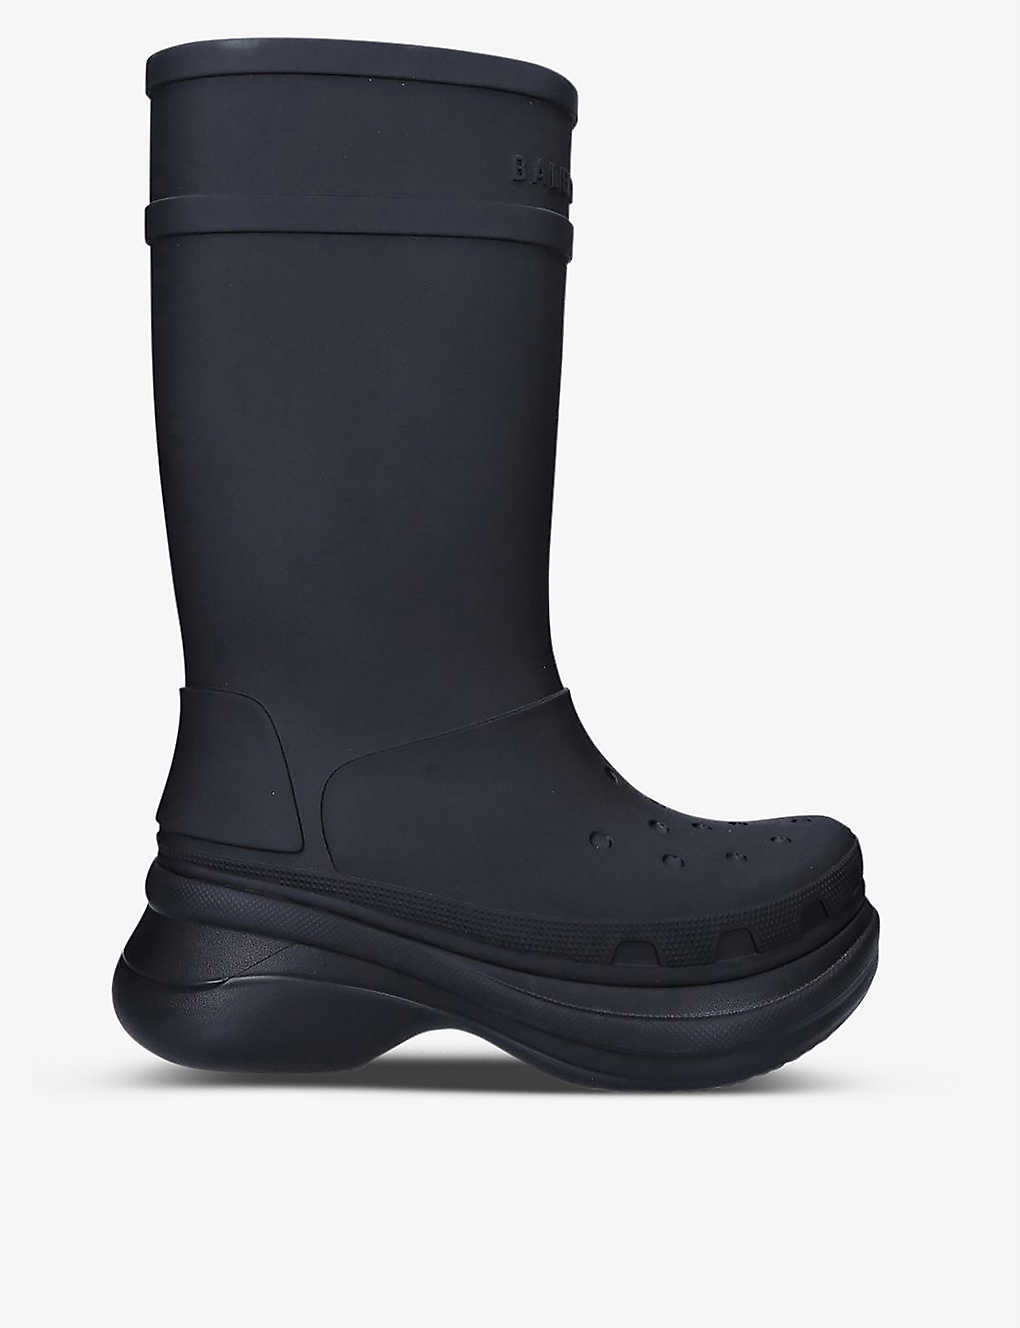 Balenciaga x Crocs chunky rubber boots - 1